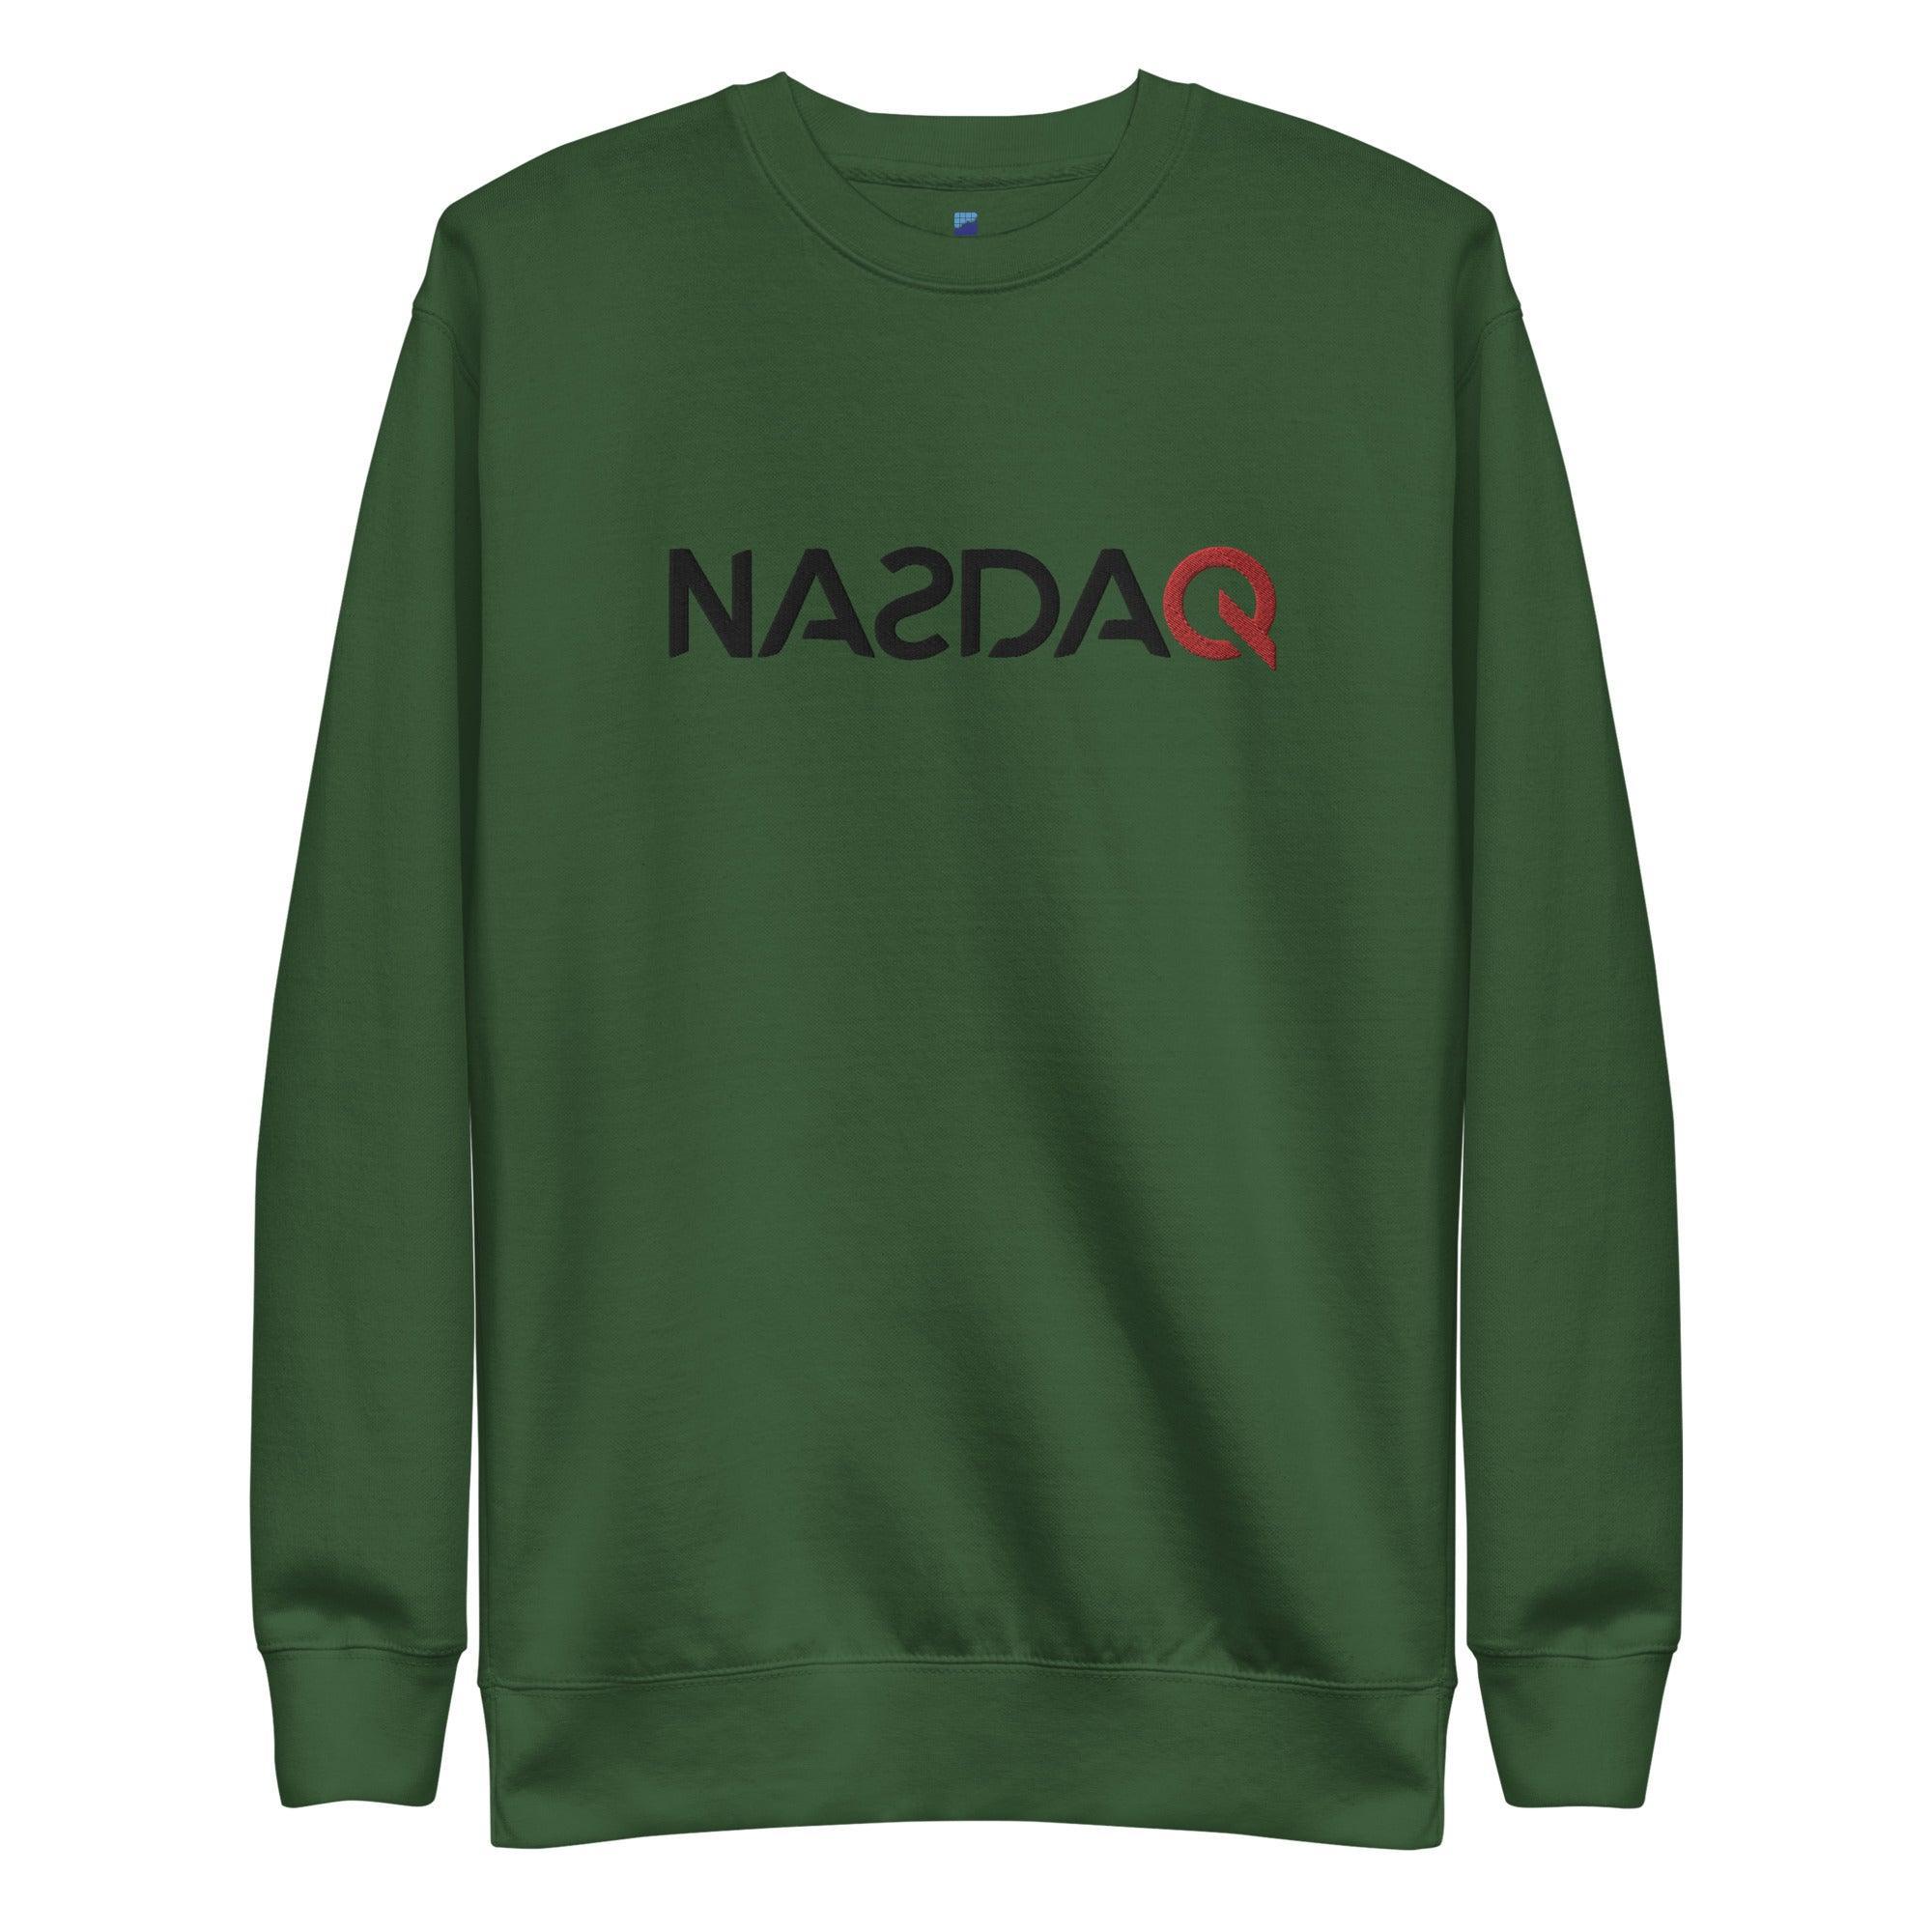 Nasdaq Stock Market Exchange Sweatshirt - InvestmenTees